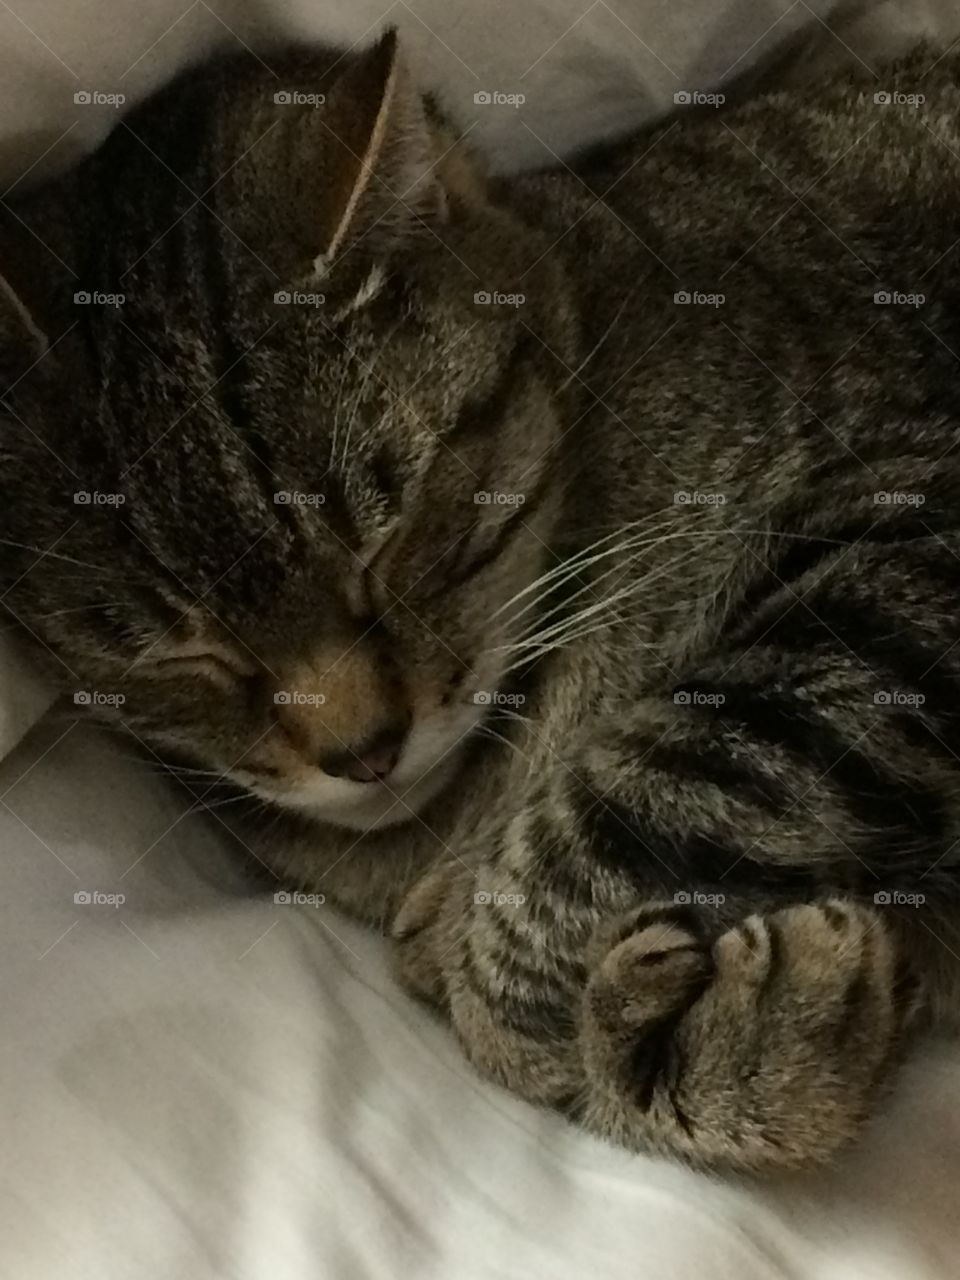 My polydactyl cat sleeping. 